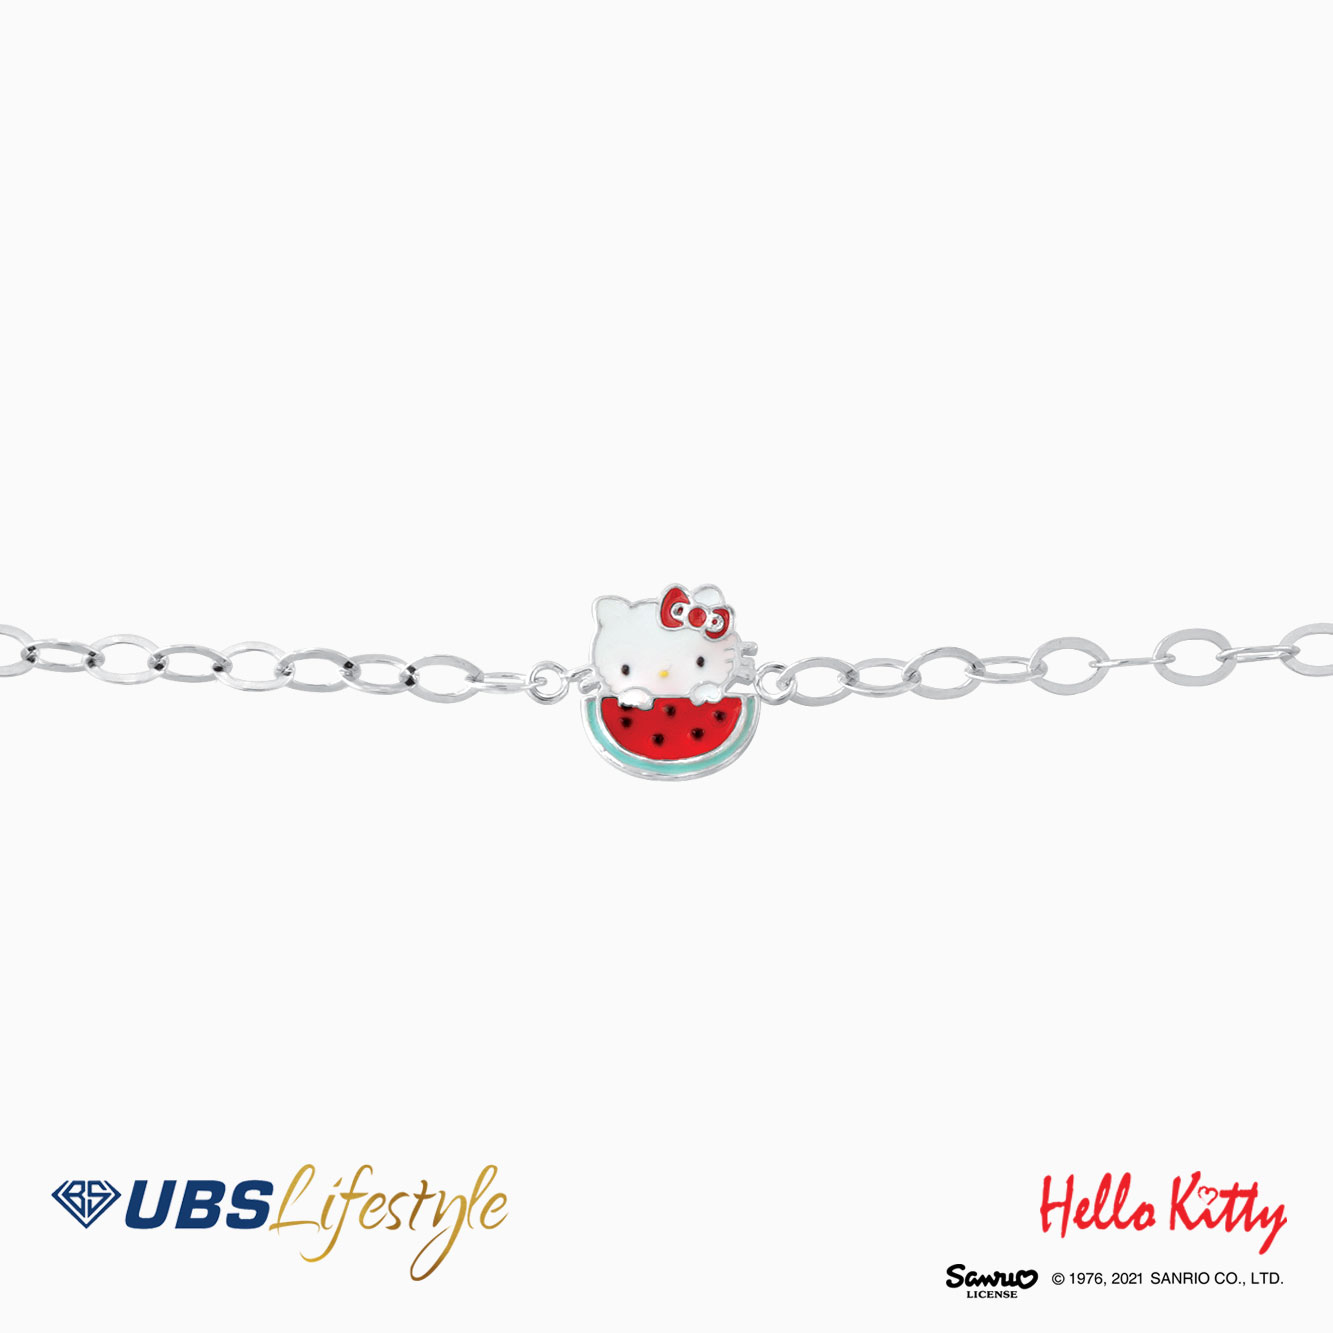 UBS Gelang Emas Anak Sanrio Hello Kitty - Kgz0010 - 17K